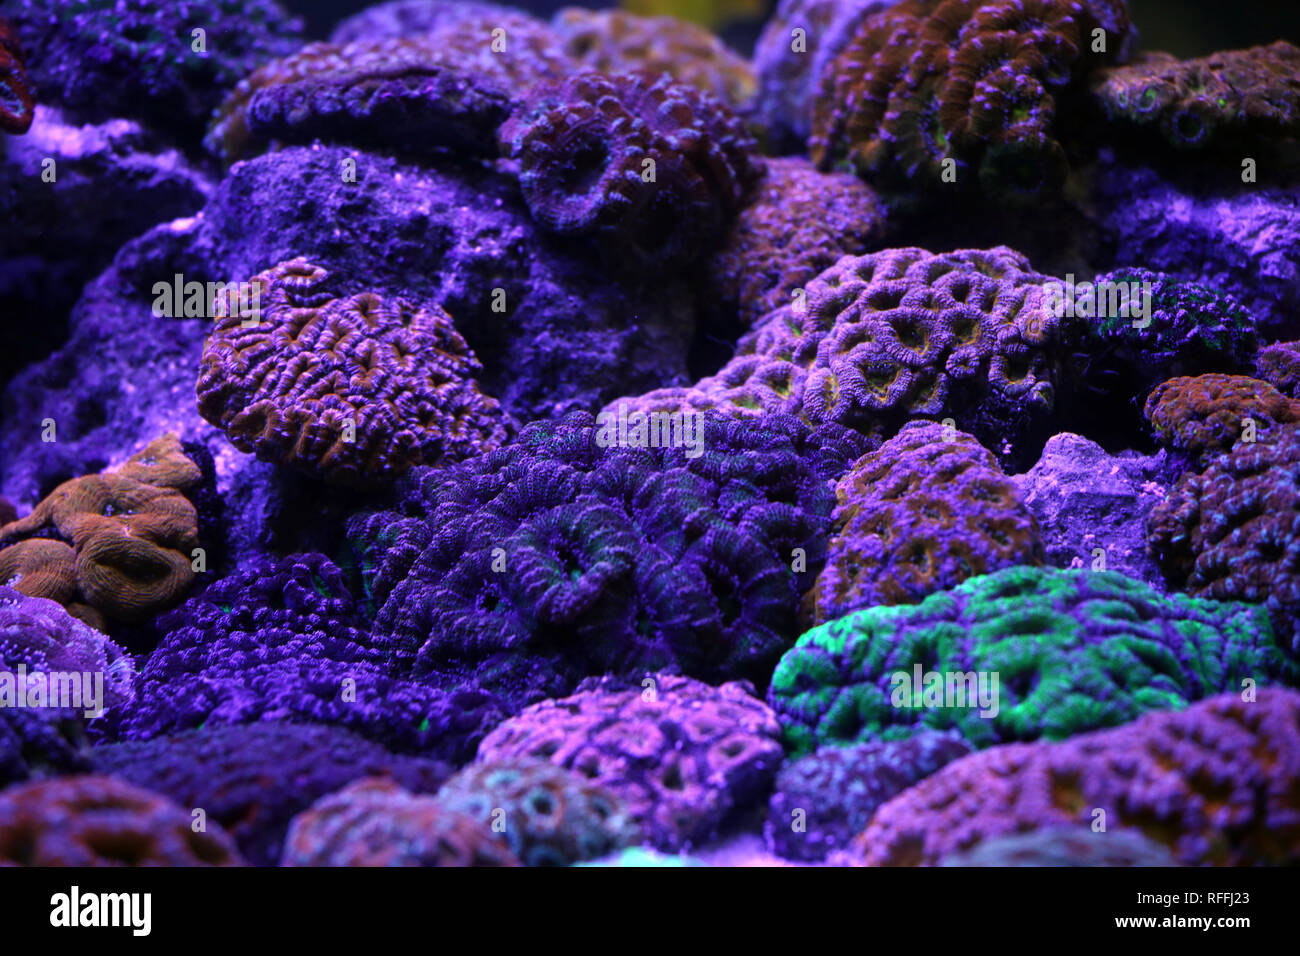 A beautiful coral reef aquarium under blue lights Stock Photo